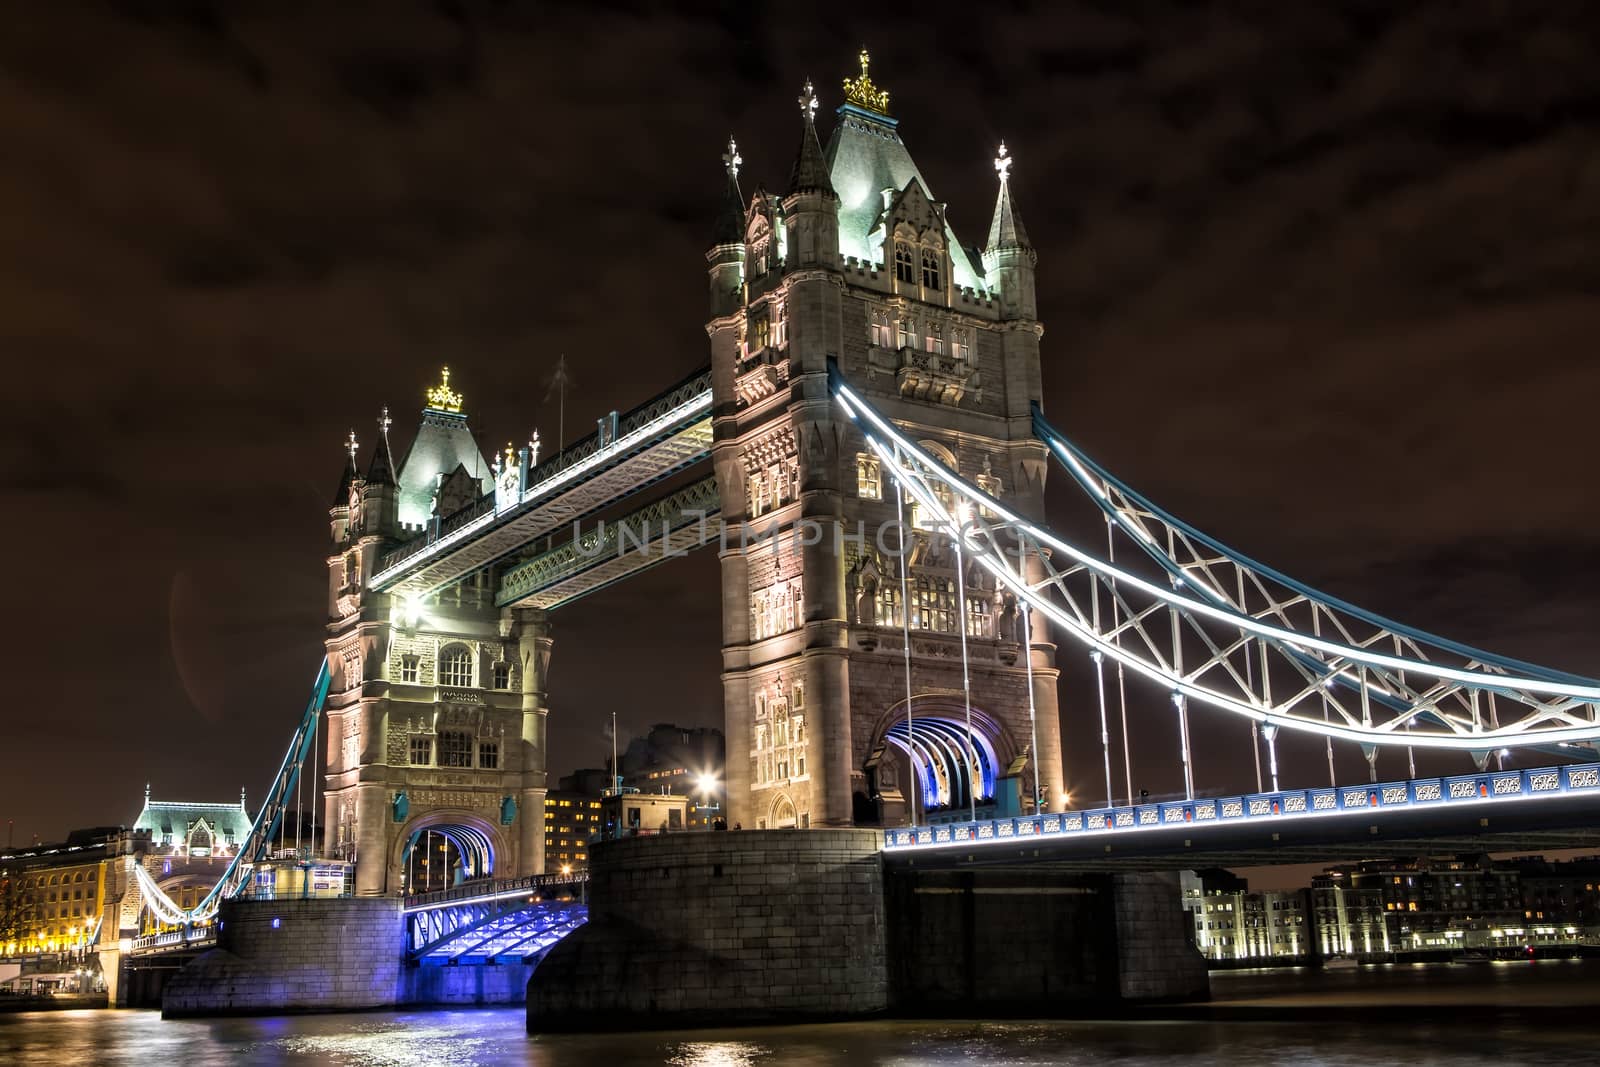 LONDON: Tower Bridge at night by mitakag